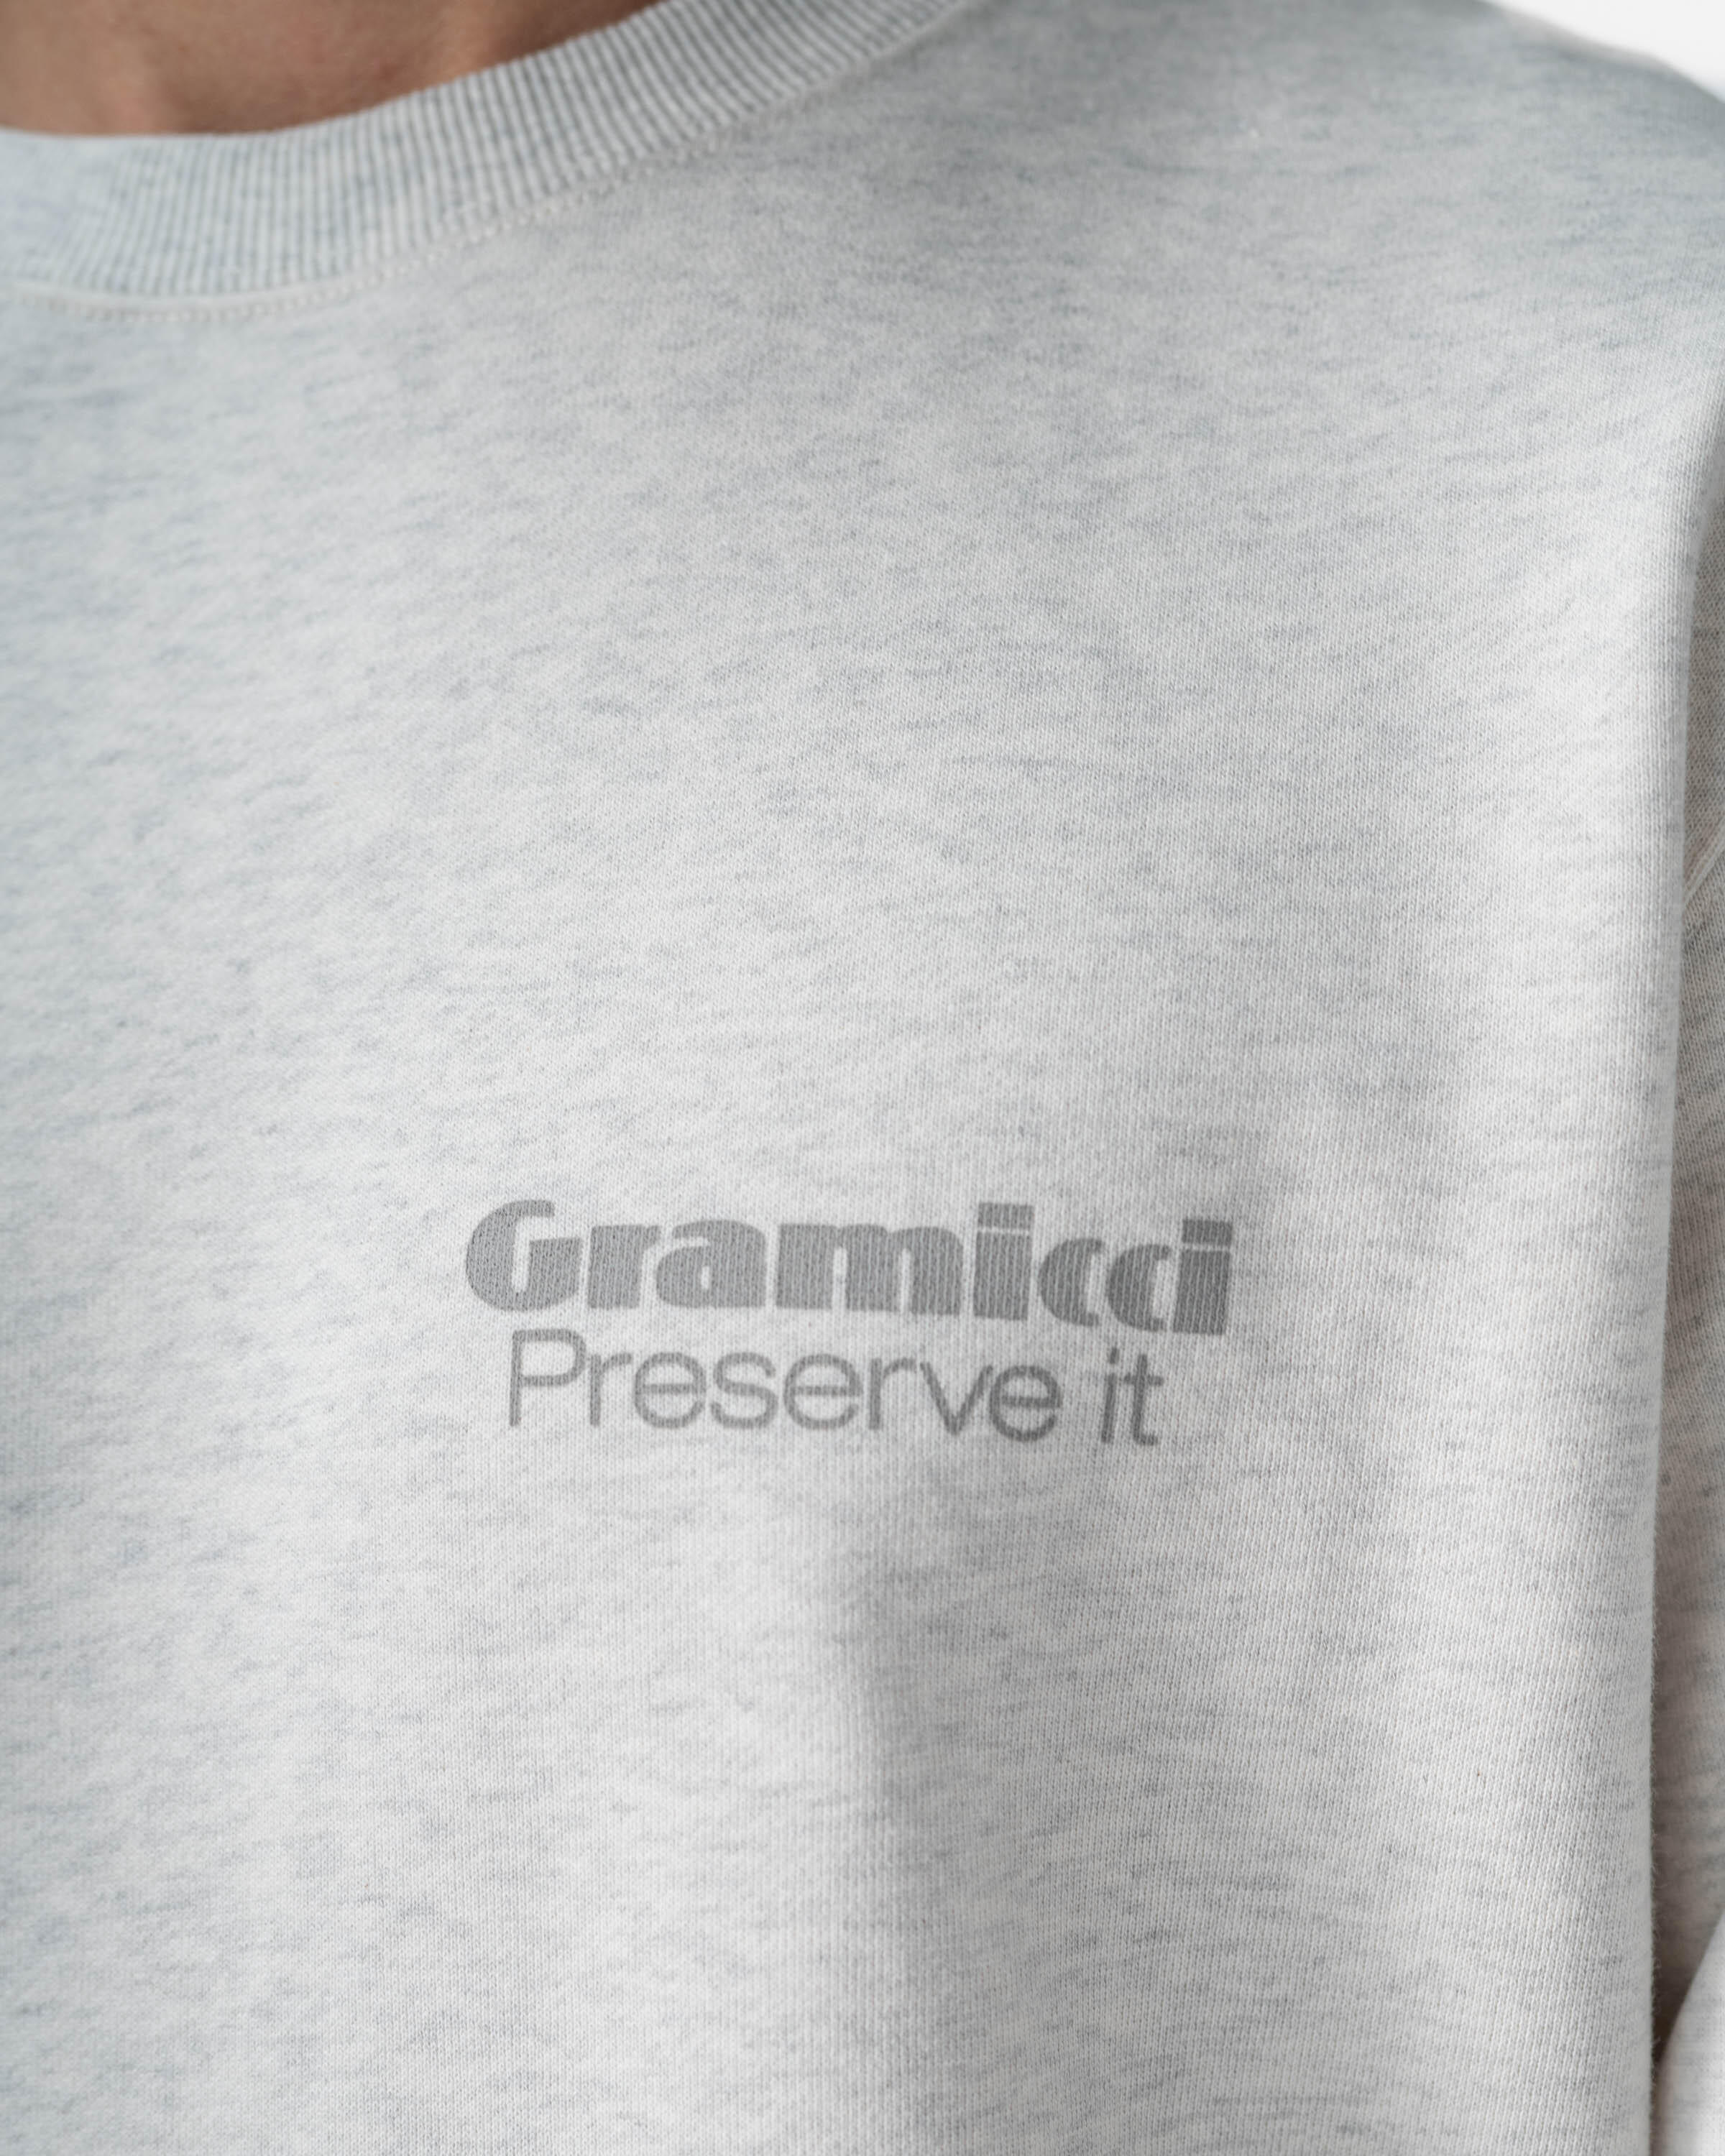 Gramicci PRESERVE-IT SWEATSHIRT